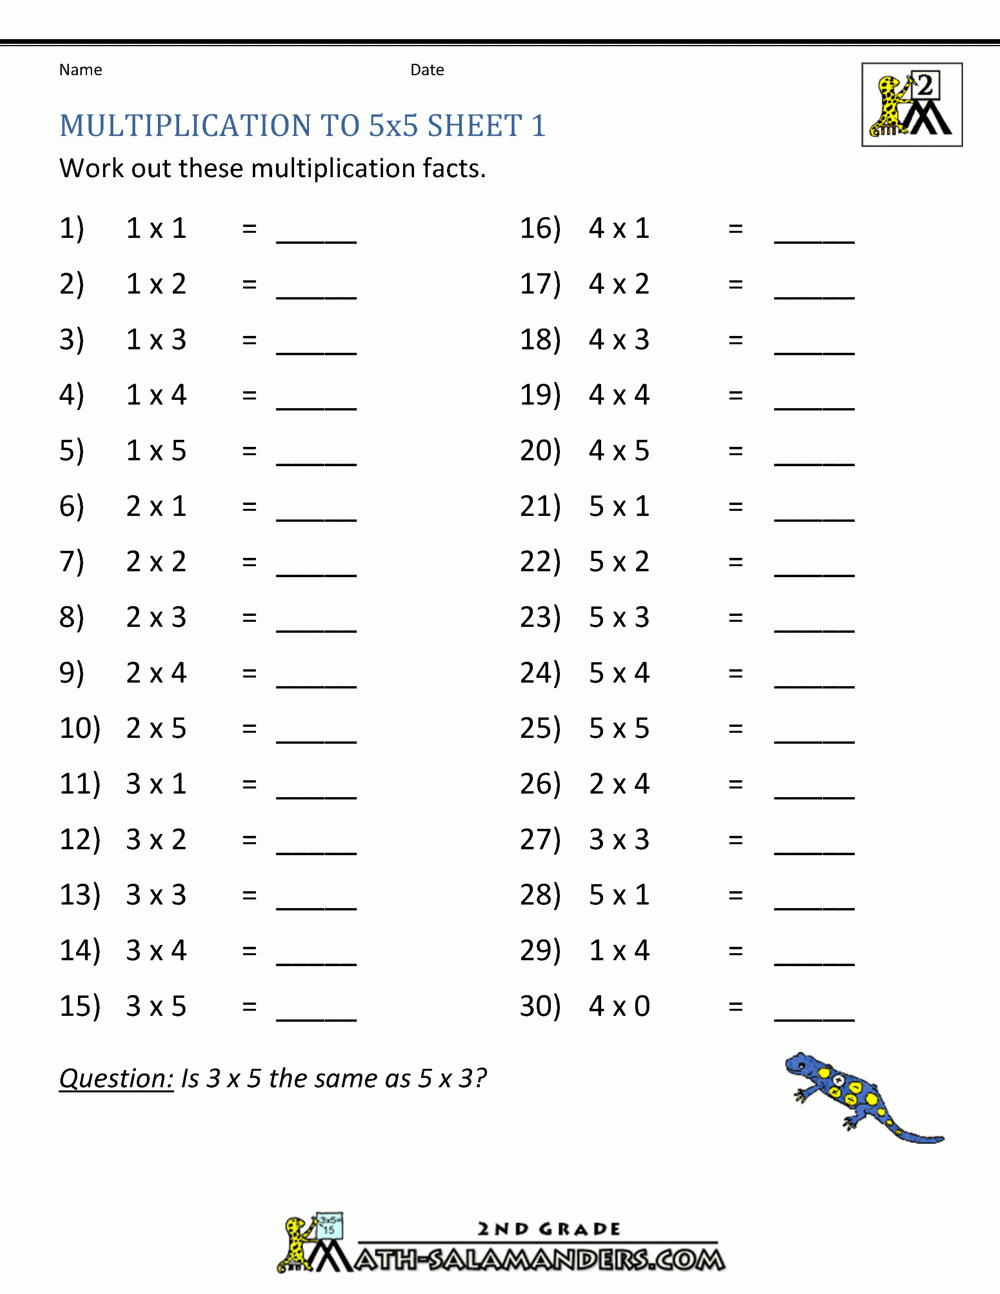 multiplication-facts-0-2-worksheets-times-tables-worksheets-timed